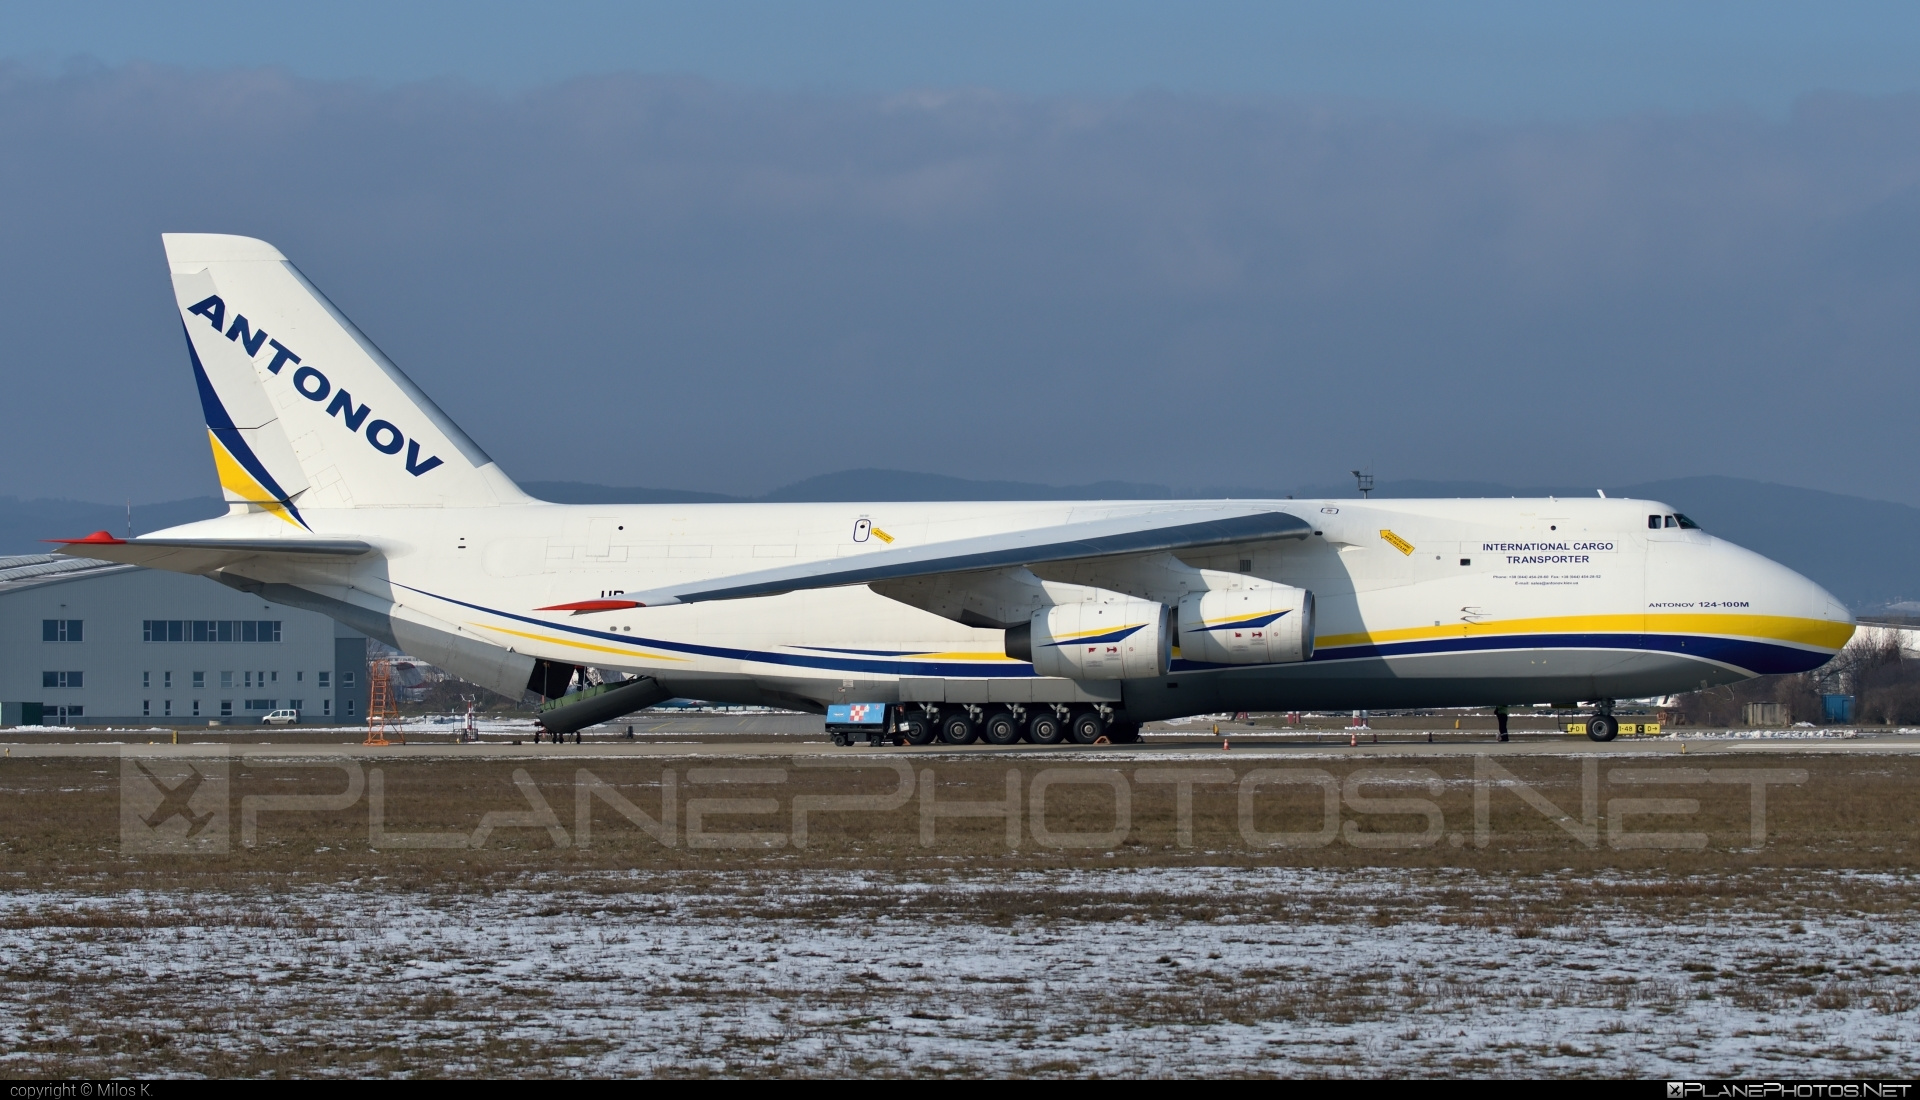 Antonov An-124-100M Ruslan - UR-82007 operated by Antonov Airlines #AntonovAirlines #an124 #an124100m #an124100mruslan #an124ruslan #antonov #antonov124 #antonovan124